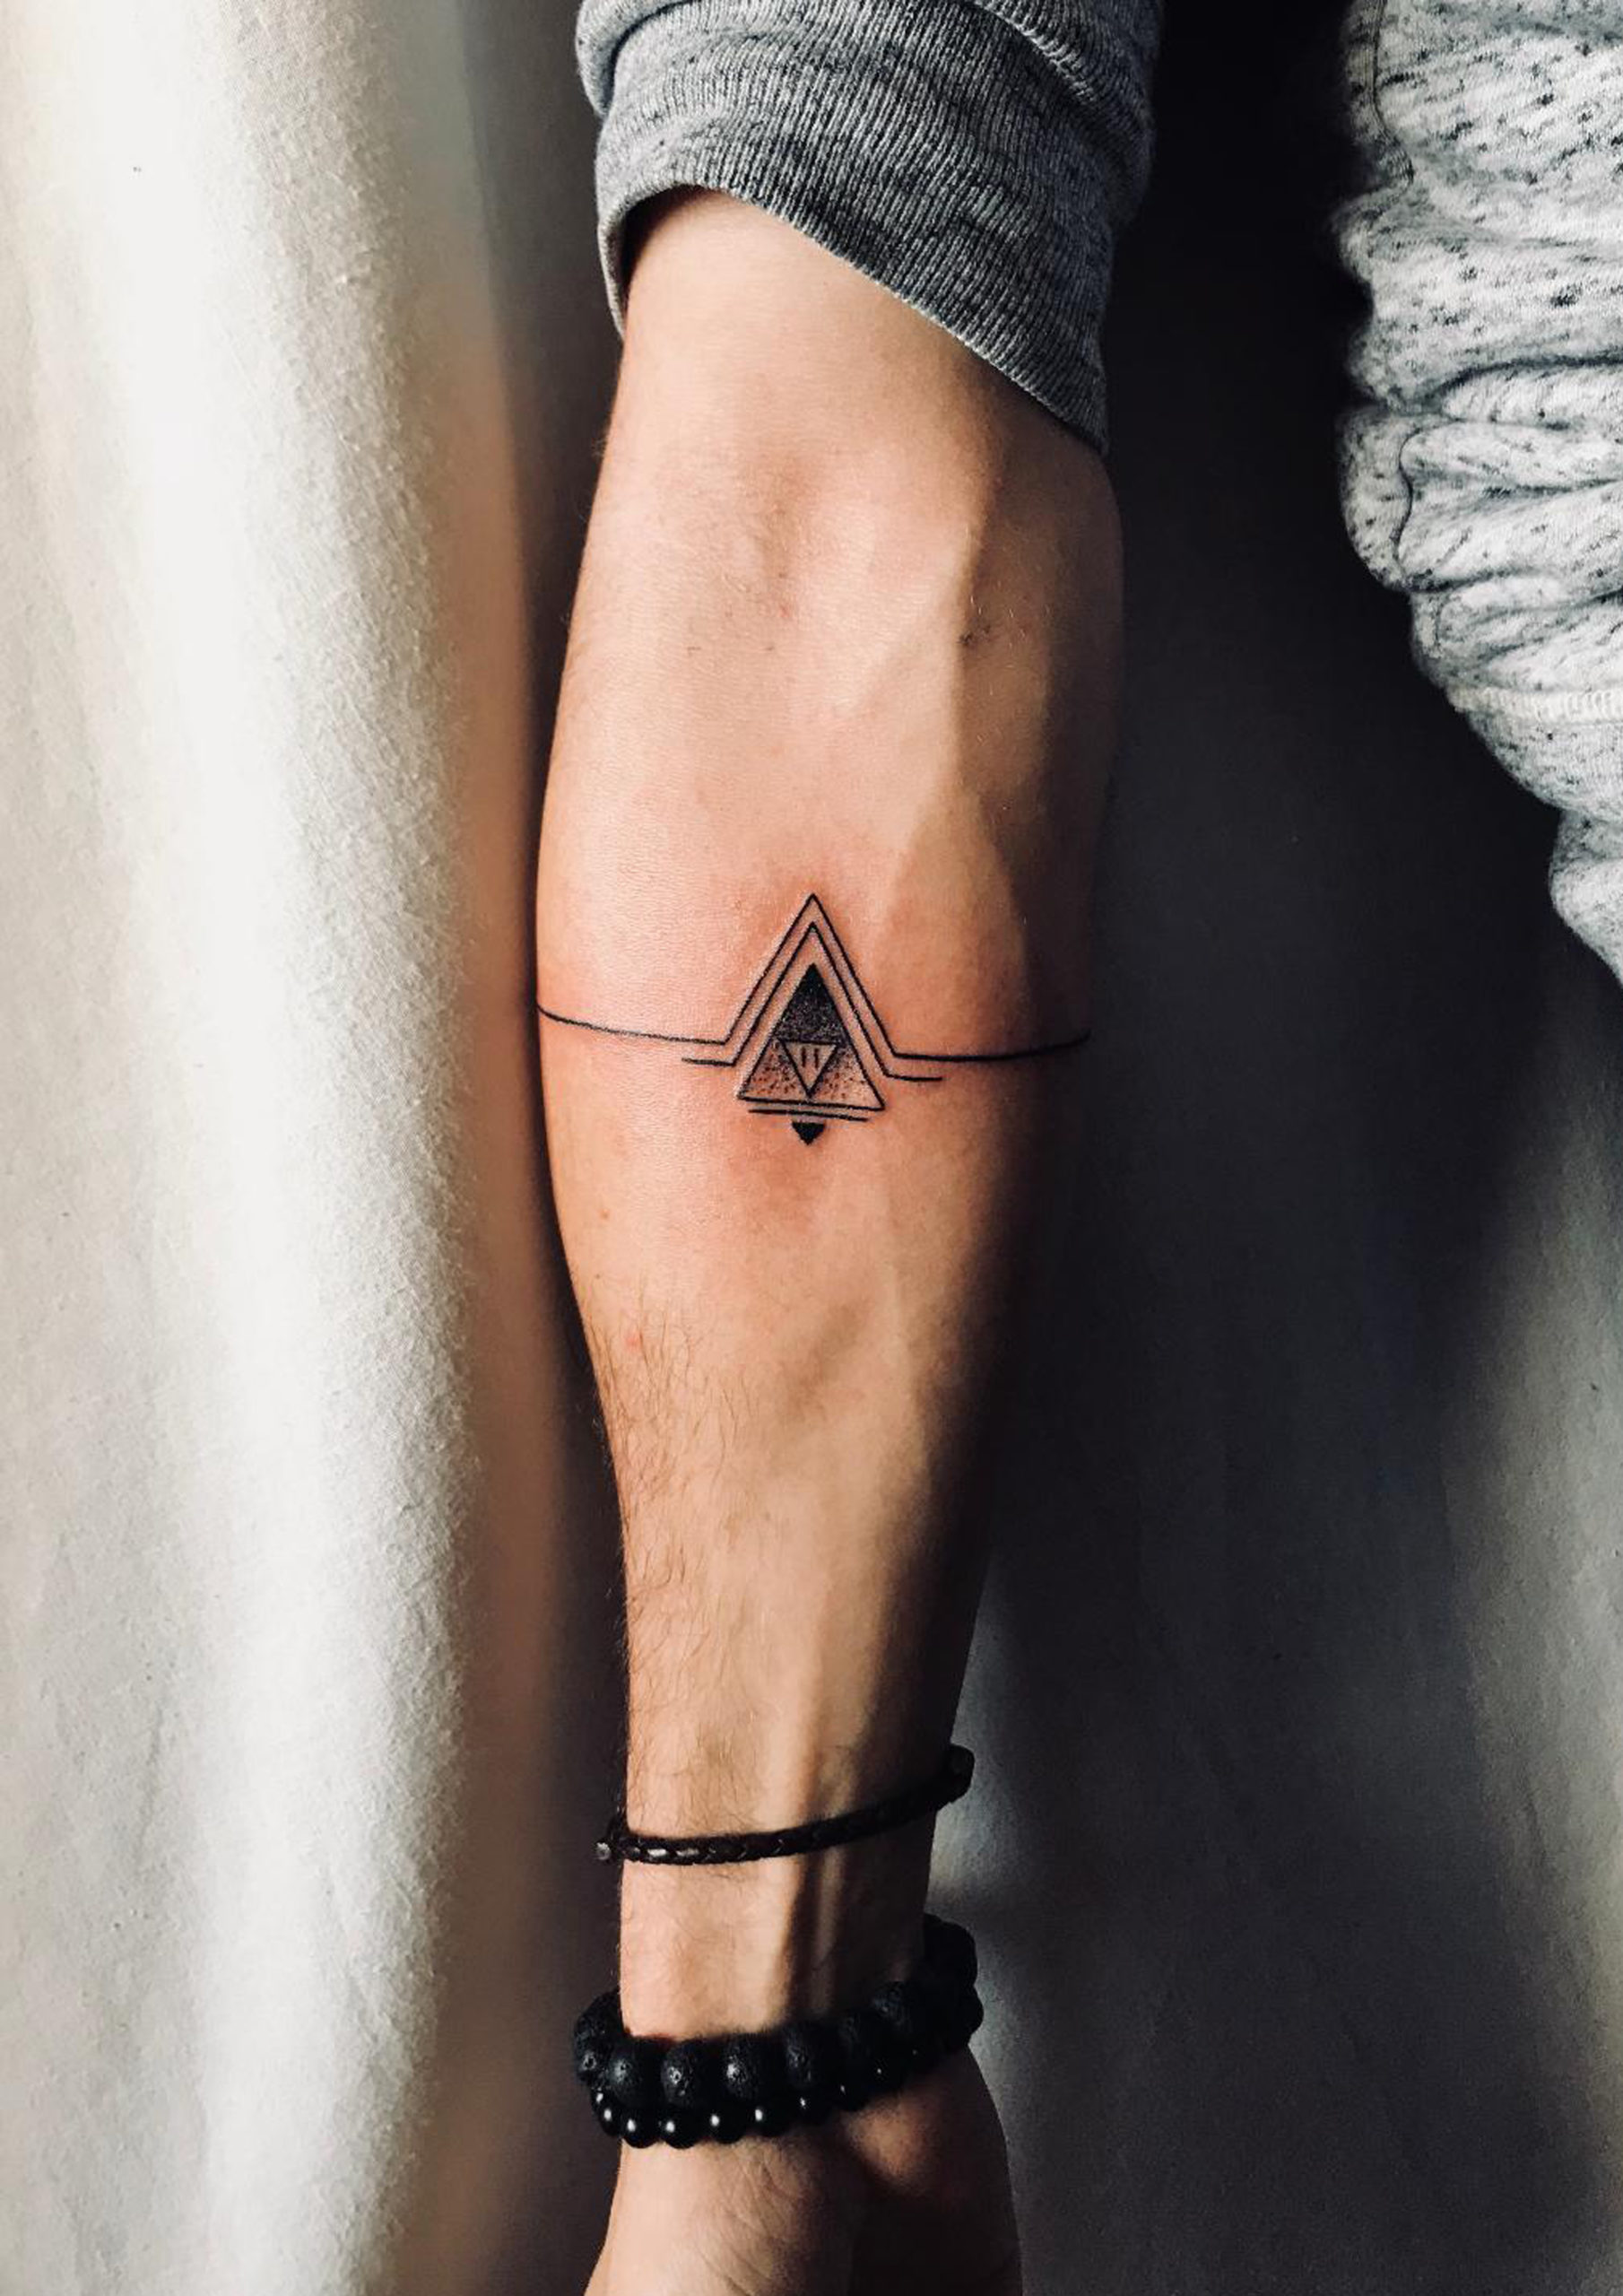 Tatouage ligne triangle avant bras Cavezza tarawa Cap d'Agde